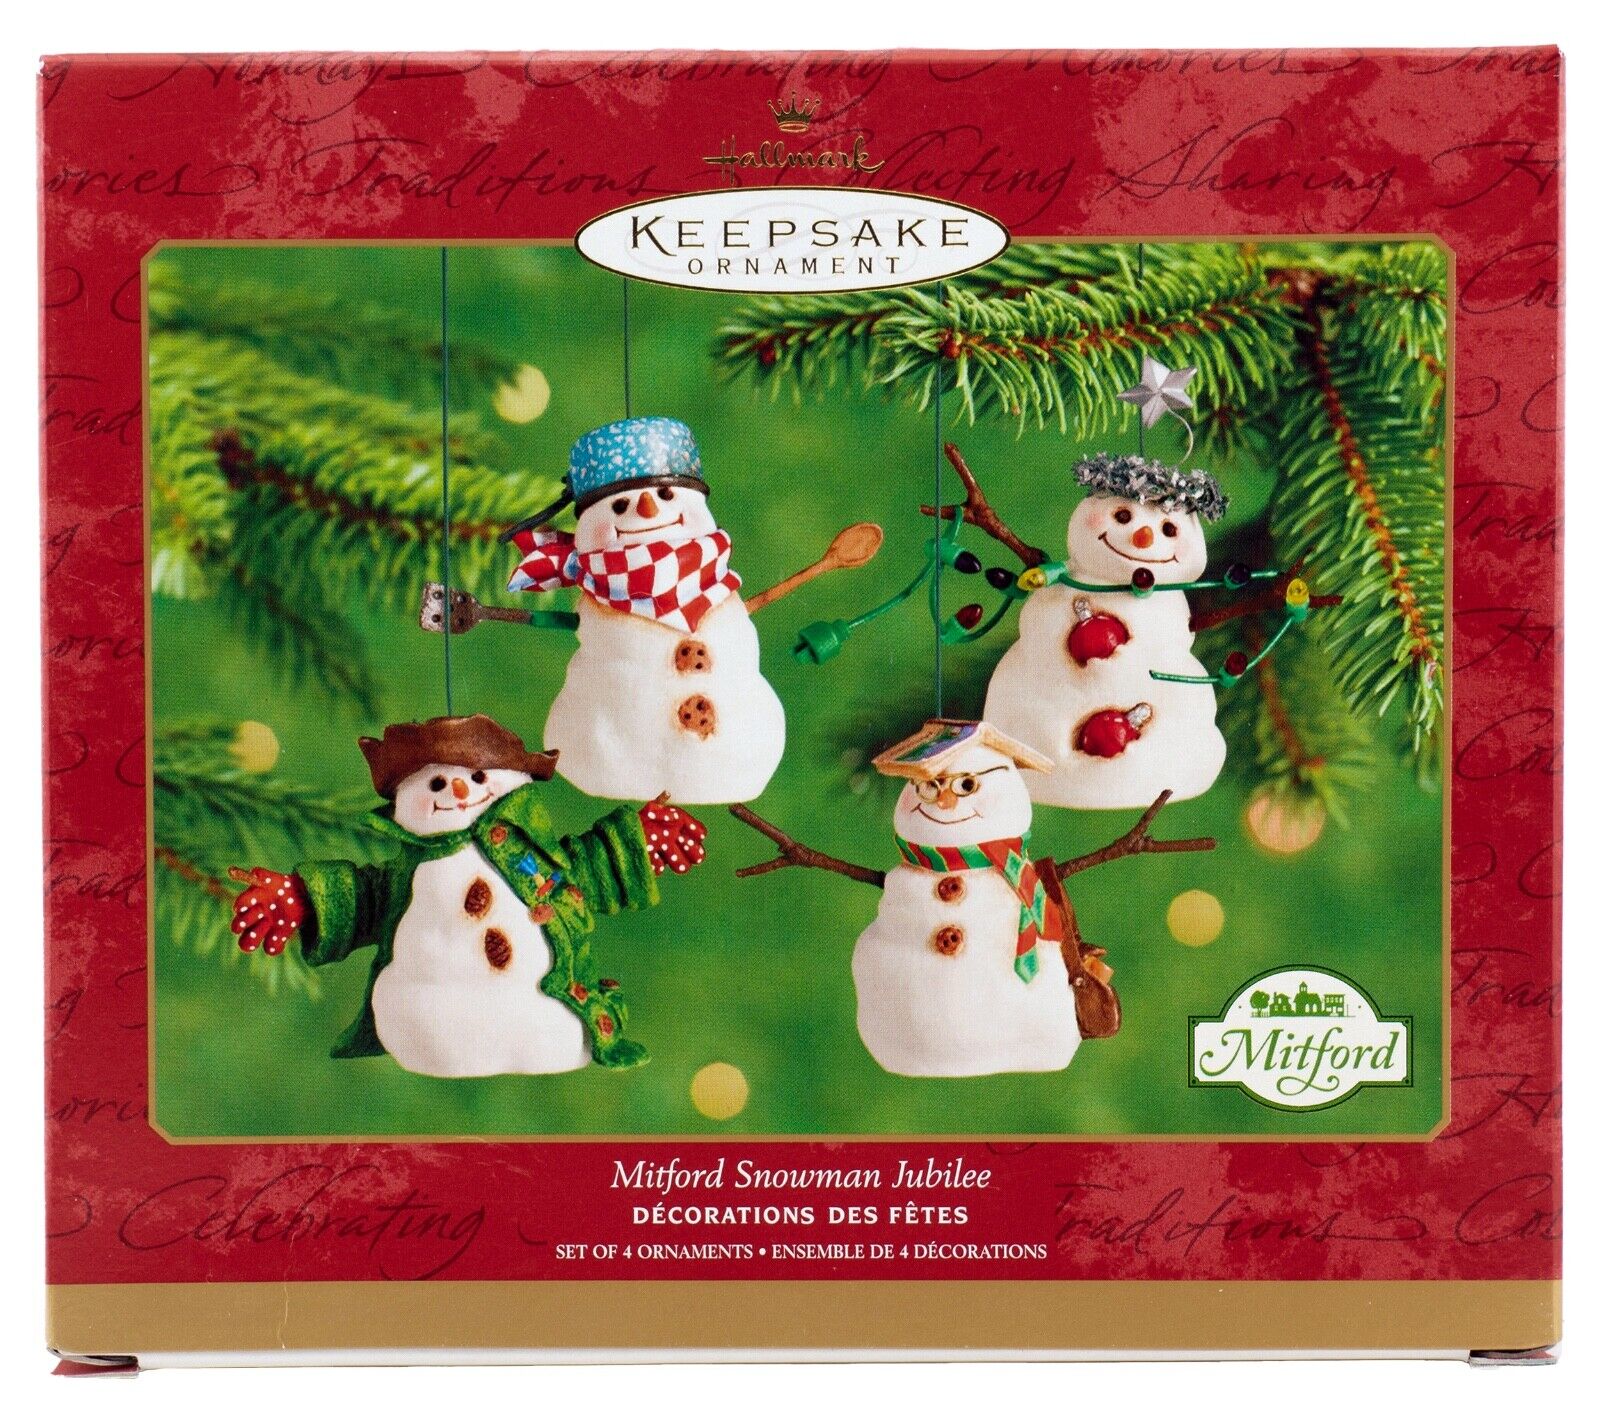 Mitford Snowman Jubilee SDMG Box NEW Hallmark Jan Karon 2001 Ornament Set of 4